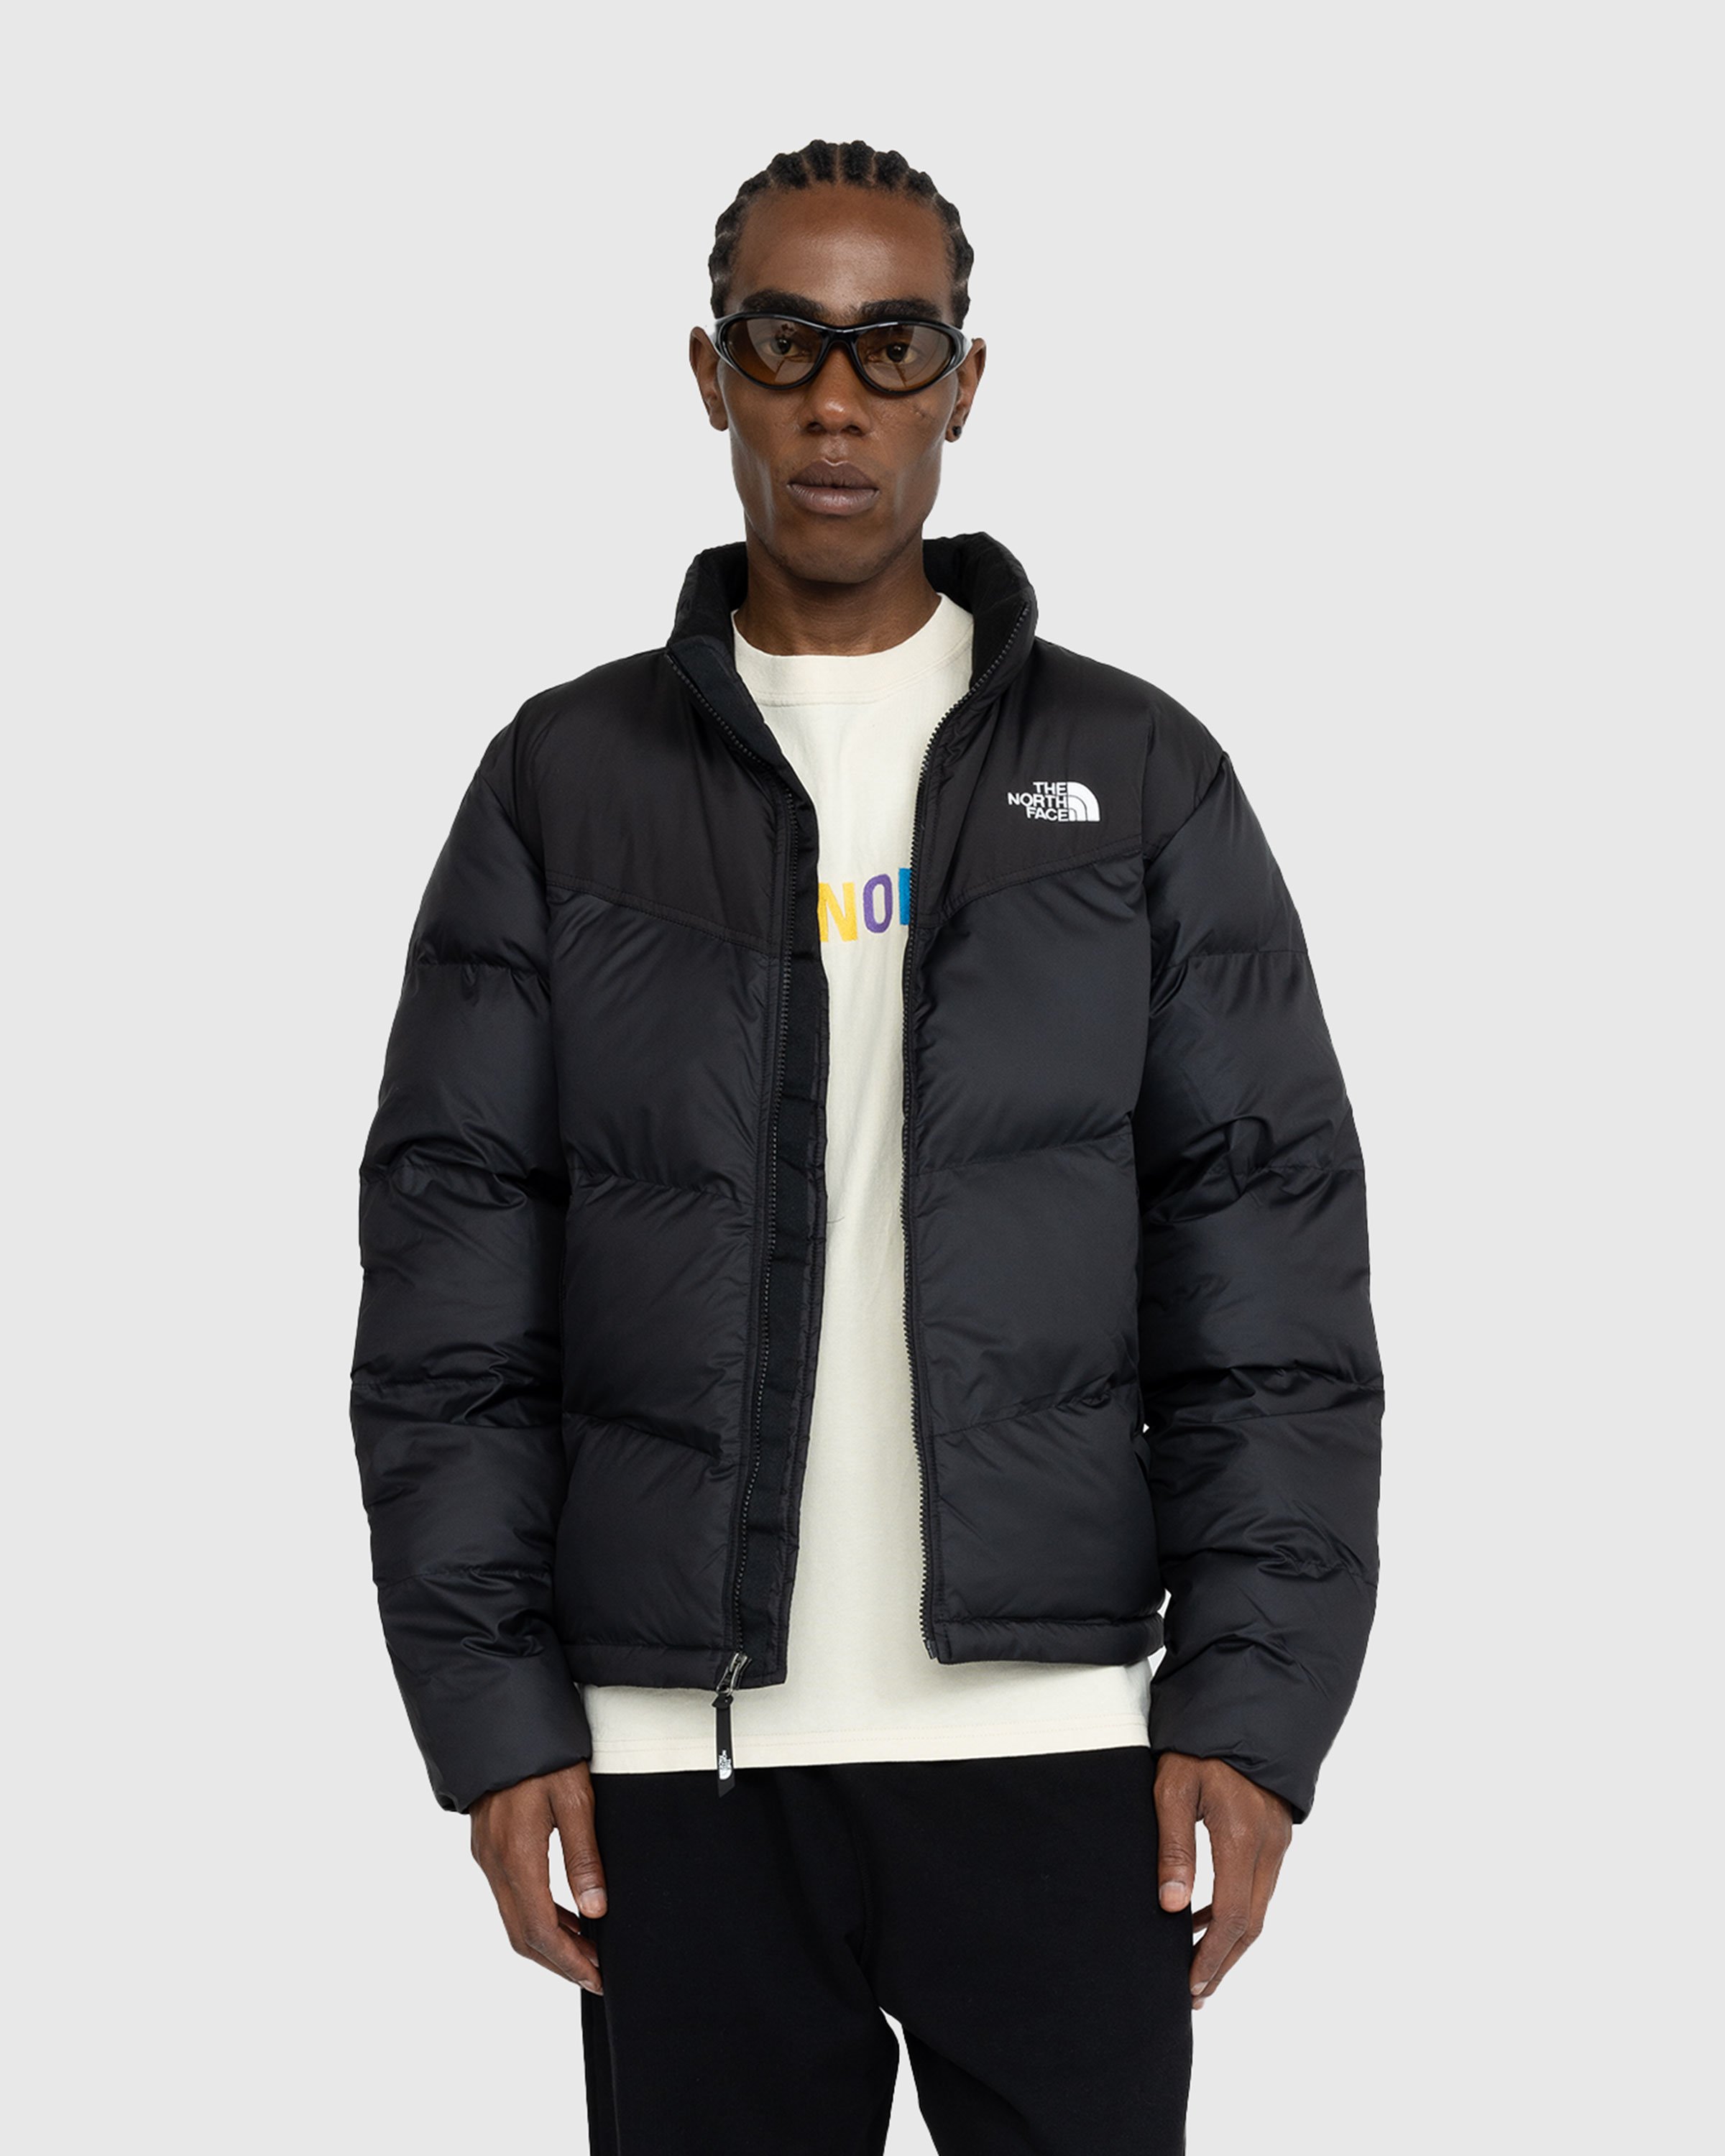 The North Face – Saikuru Jacket TNF Black | Highsnobiety Shop